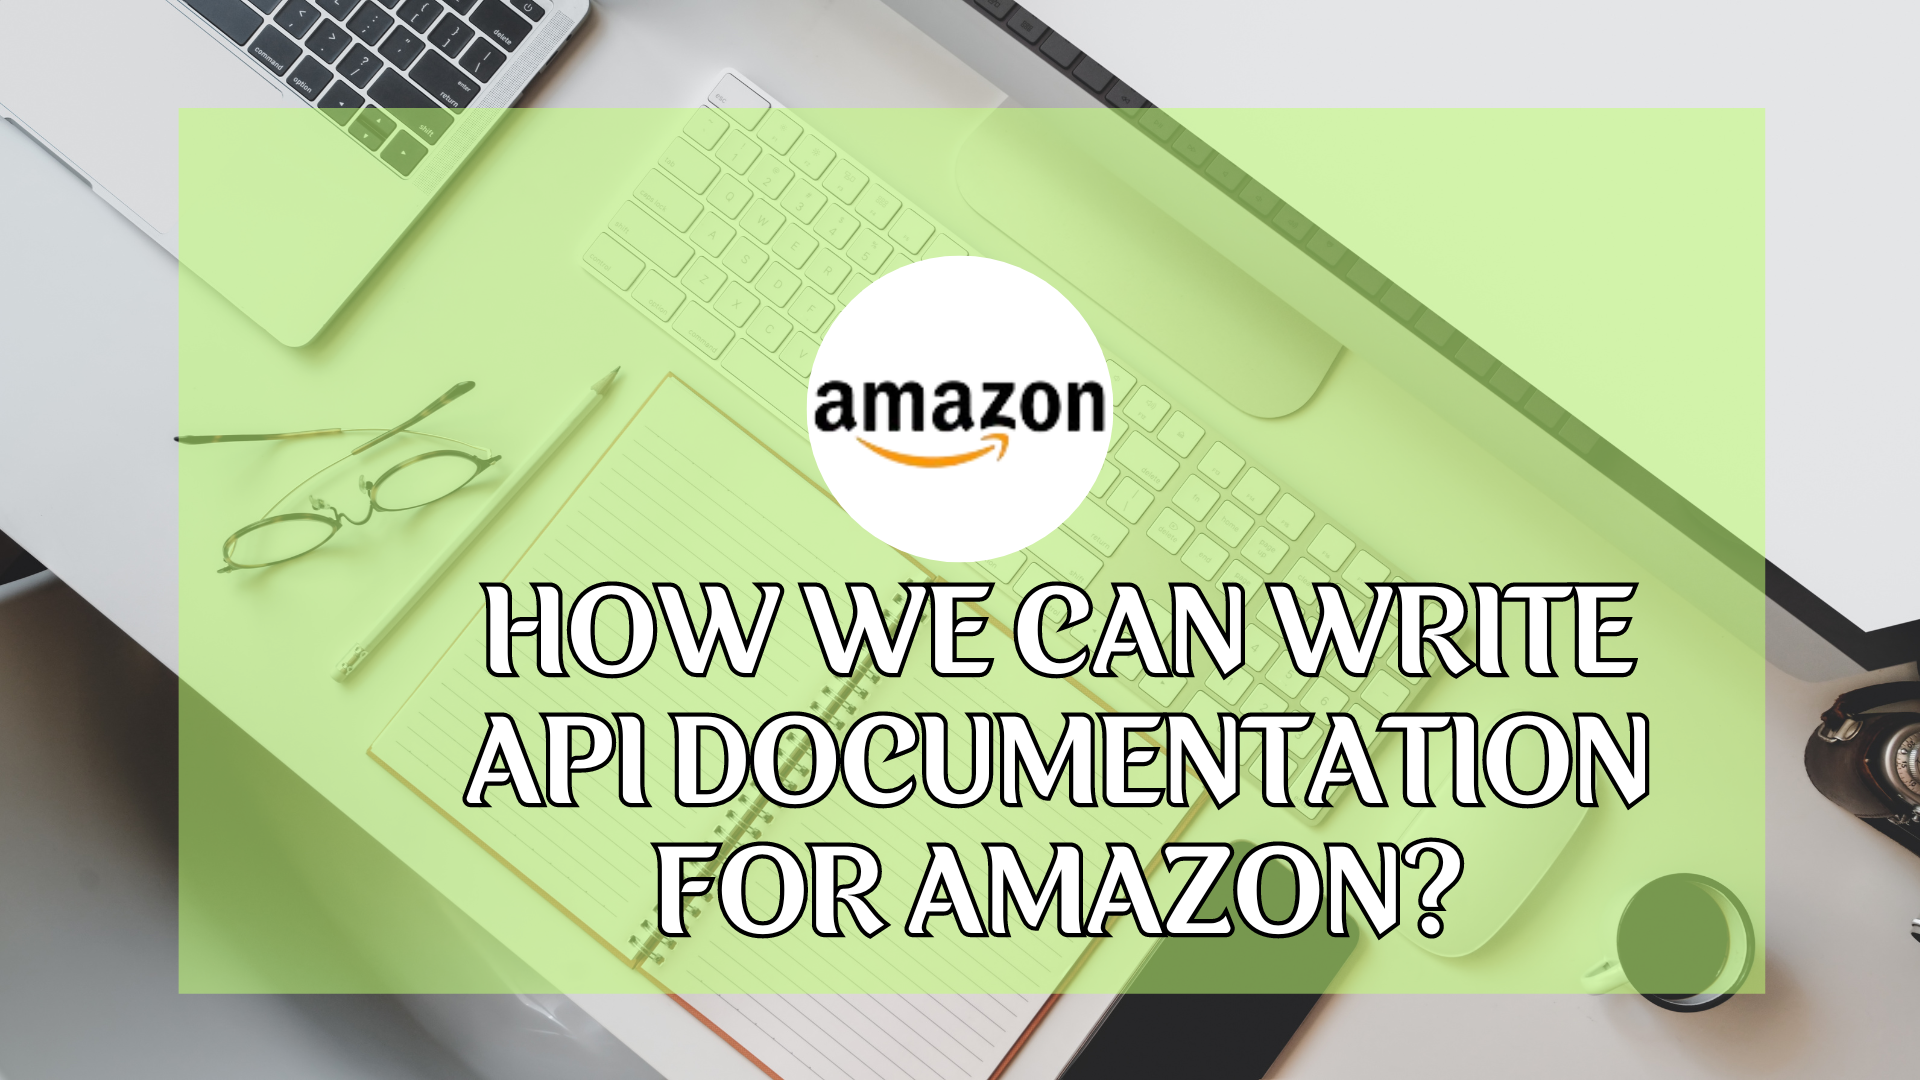 How we can write API documentation for Amazon?